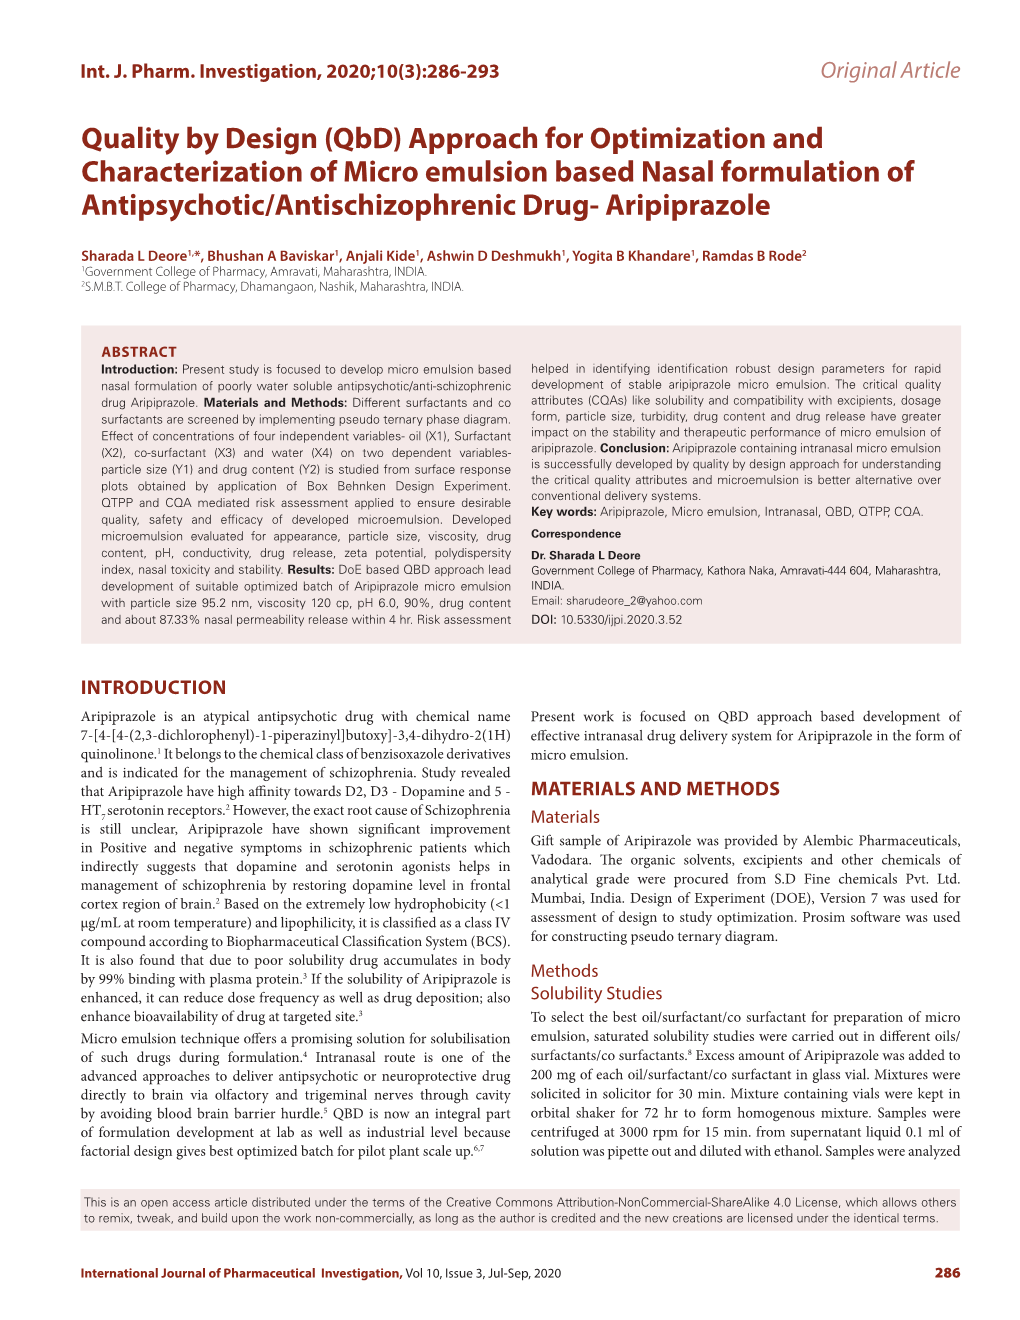 Qbd) Approach for Optimization and Characterization of Micro Emulsion Based Nasal Formulation of Antipsychotic/Antischizophrenic Drug- Aripiprazole